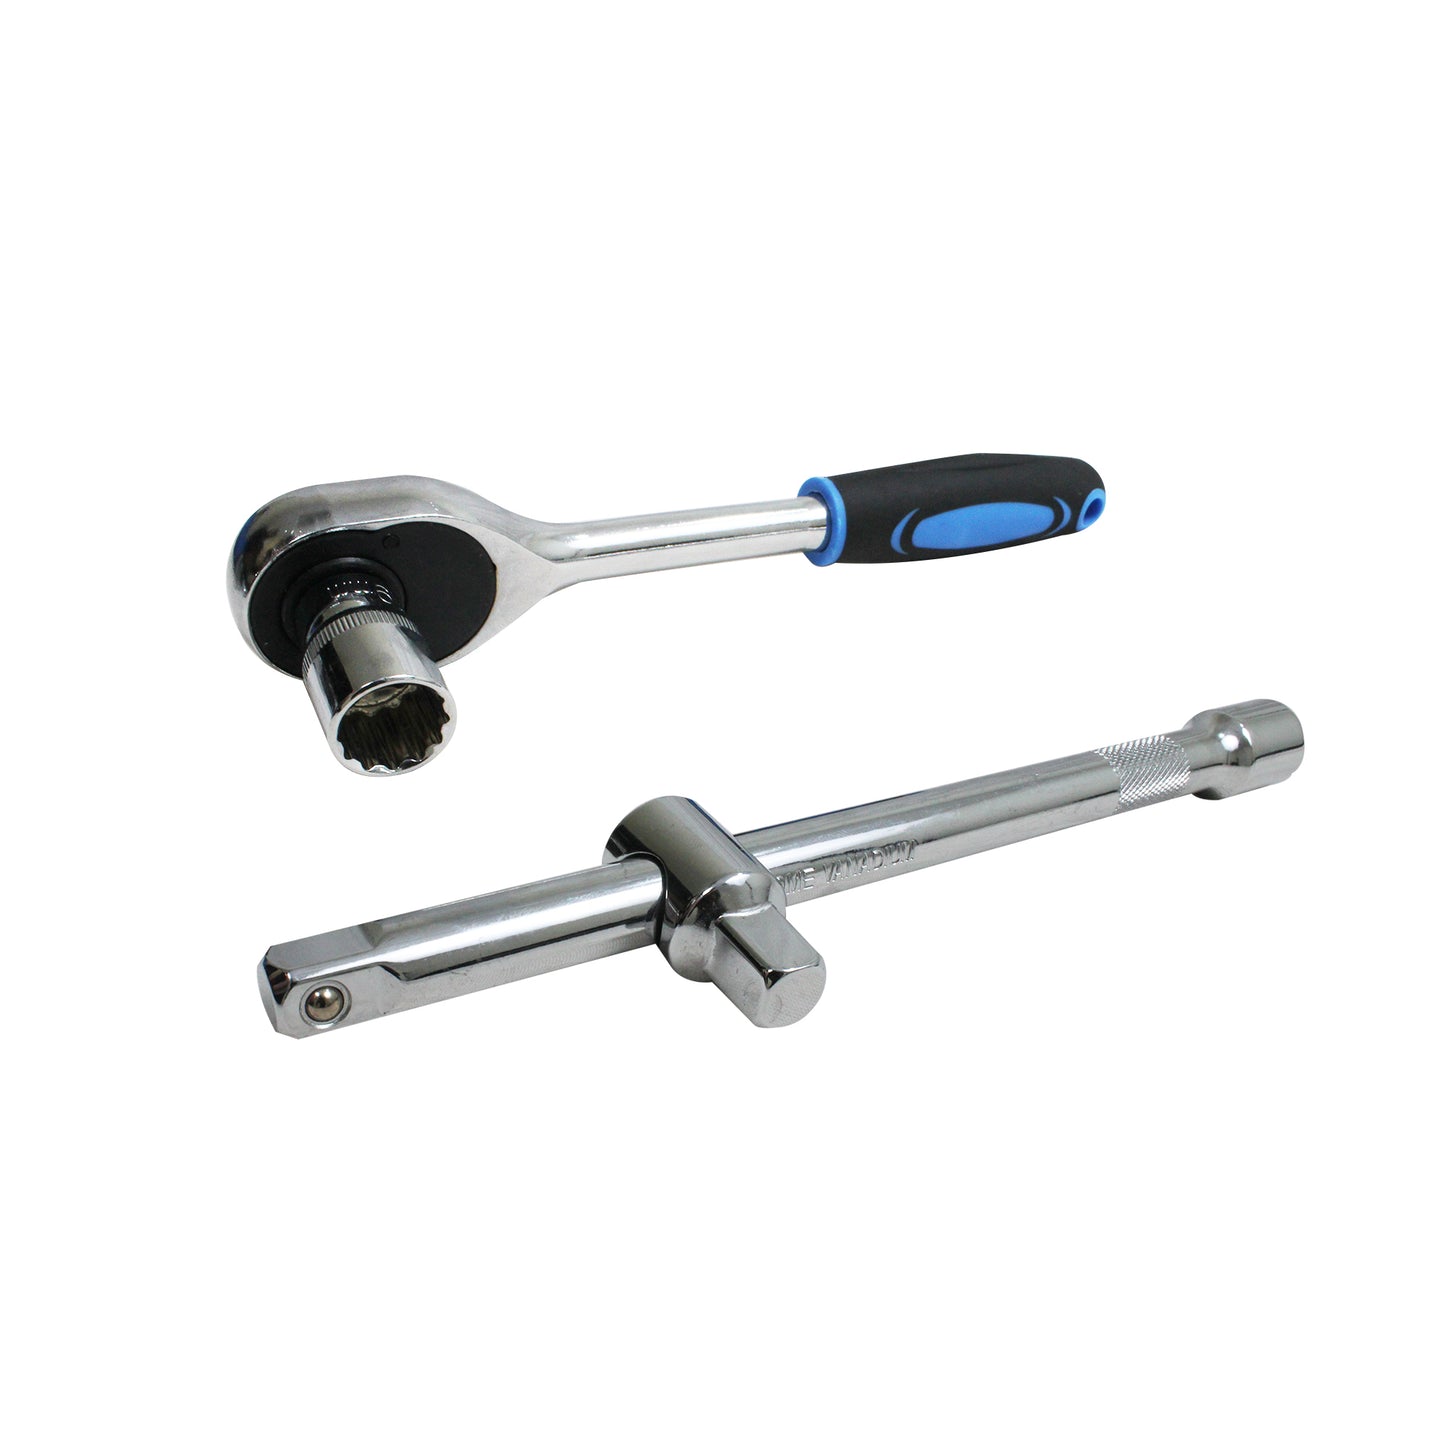 Aegon SS-32 1/2" 32 Pieces Heavy Duty 12 Point Combinational Ratchet Socket Wrench Spanner Tool Chrome Vanadium Hand Tool Kit For Repairing Work, DIY, Auto Repairs Car & Bike